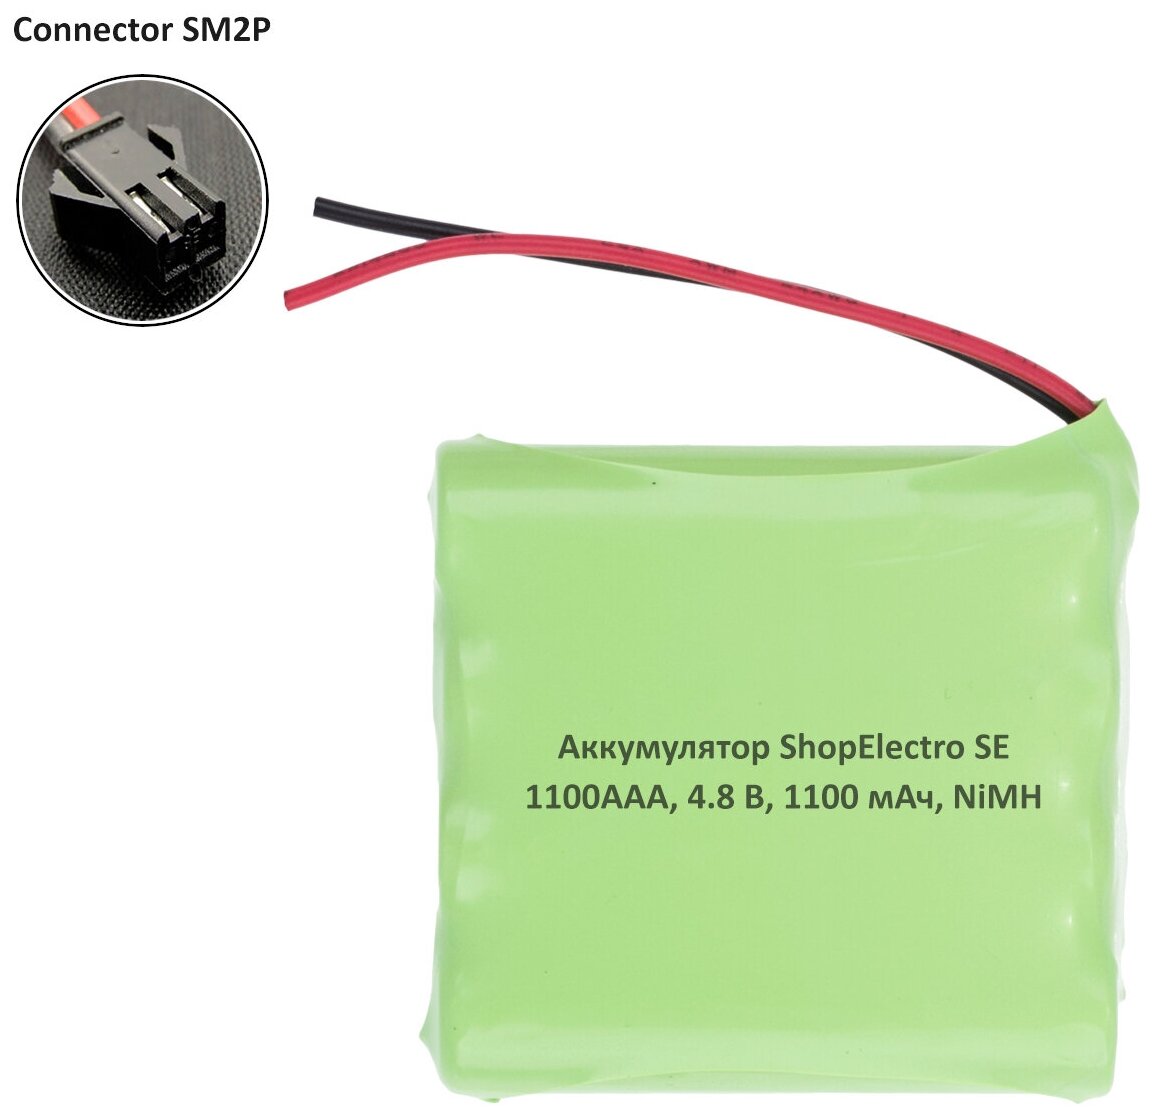 Аккумулятор ShopElectro SE1100ААА, 4.8 В, 1100 мАч/ 4.8 V, 1100 mAh, NiMH, с коннектором SM2P (1)